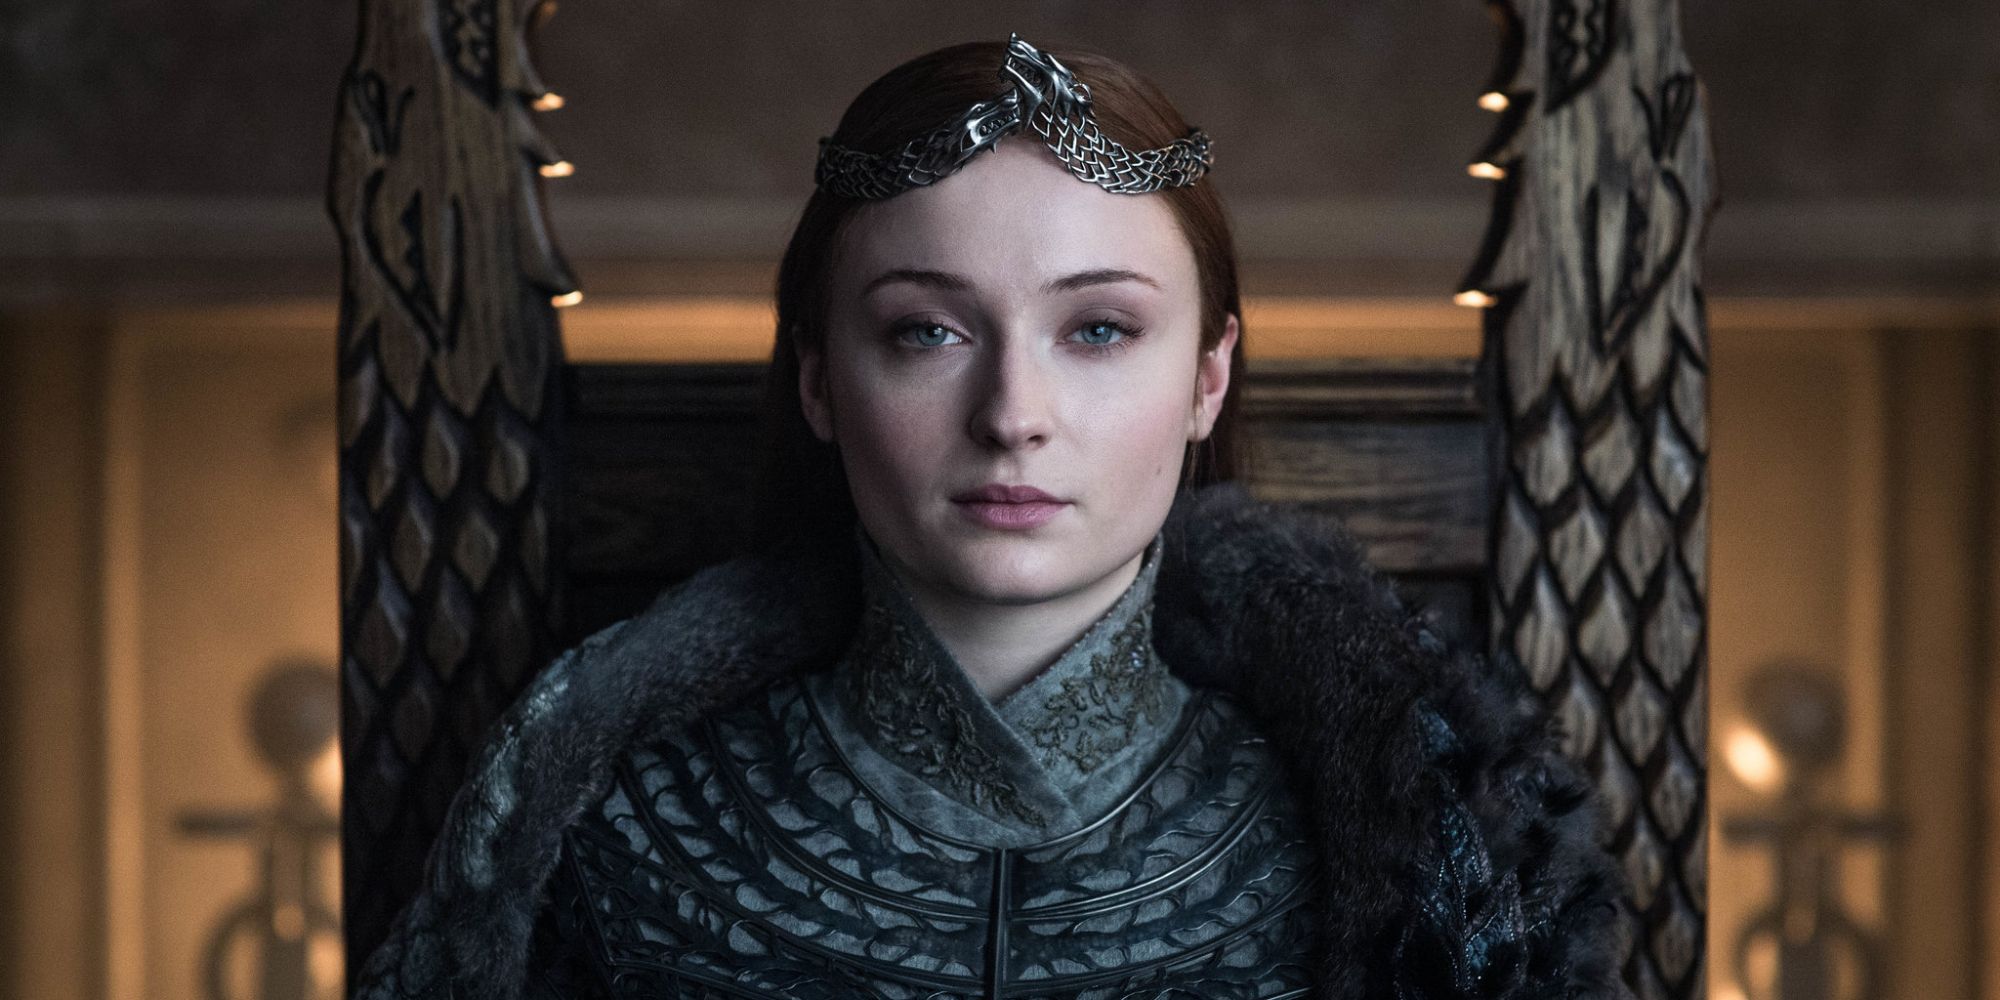 Turner as Sansa in Game of Thrones